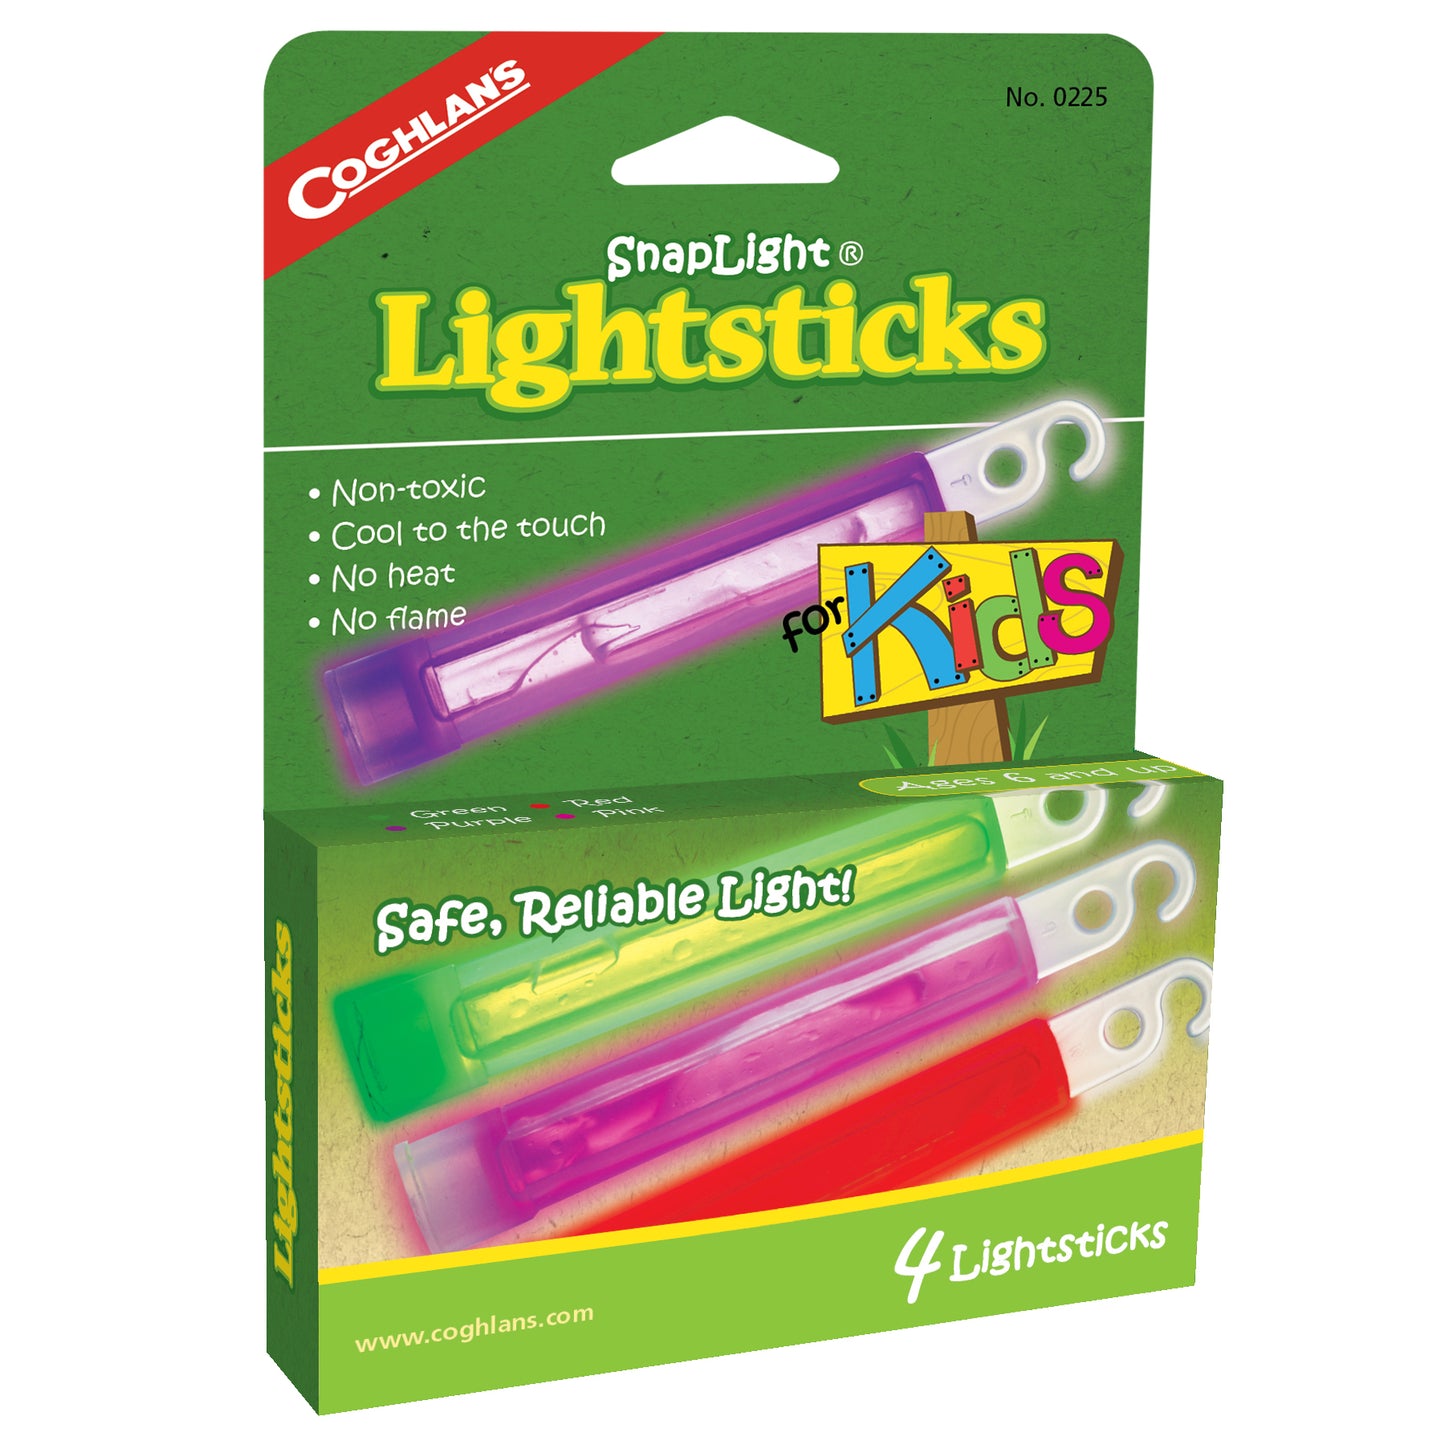 KIDS LIGHTSTICKS